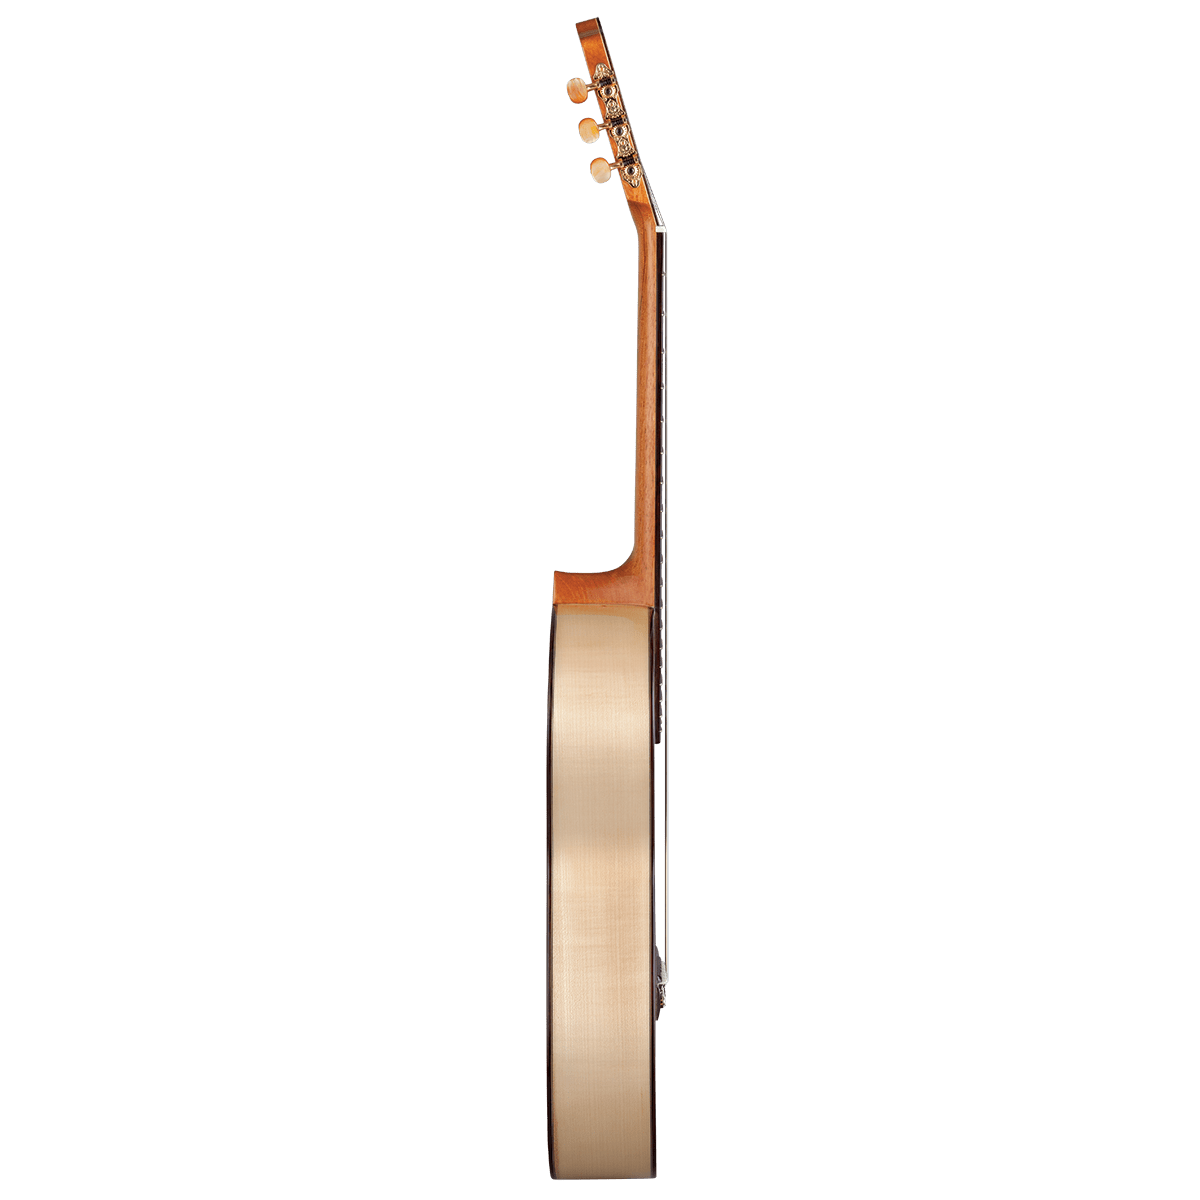 Kremona Rosa Bella All Solid Spruce / Ash Classic Guitar w/Case & LR Baggs pickup